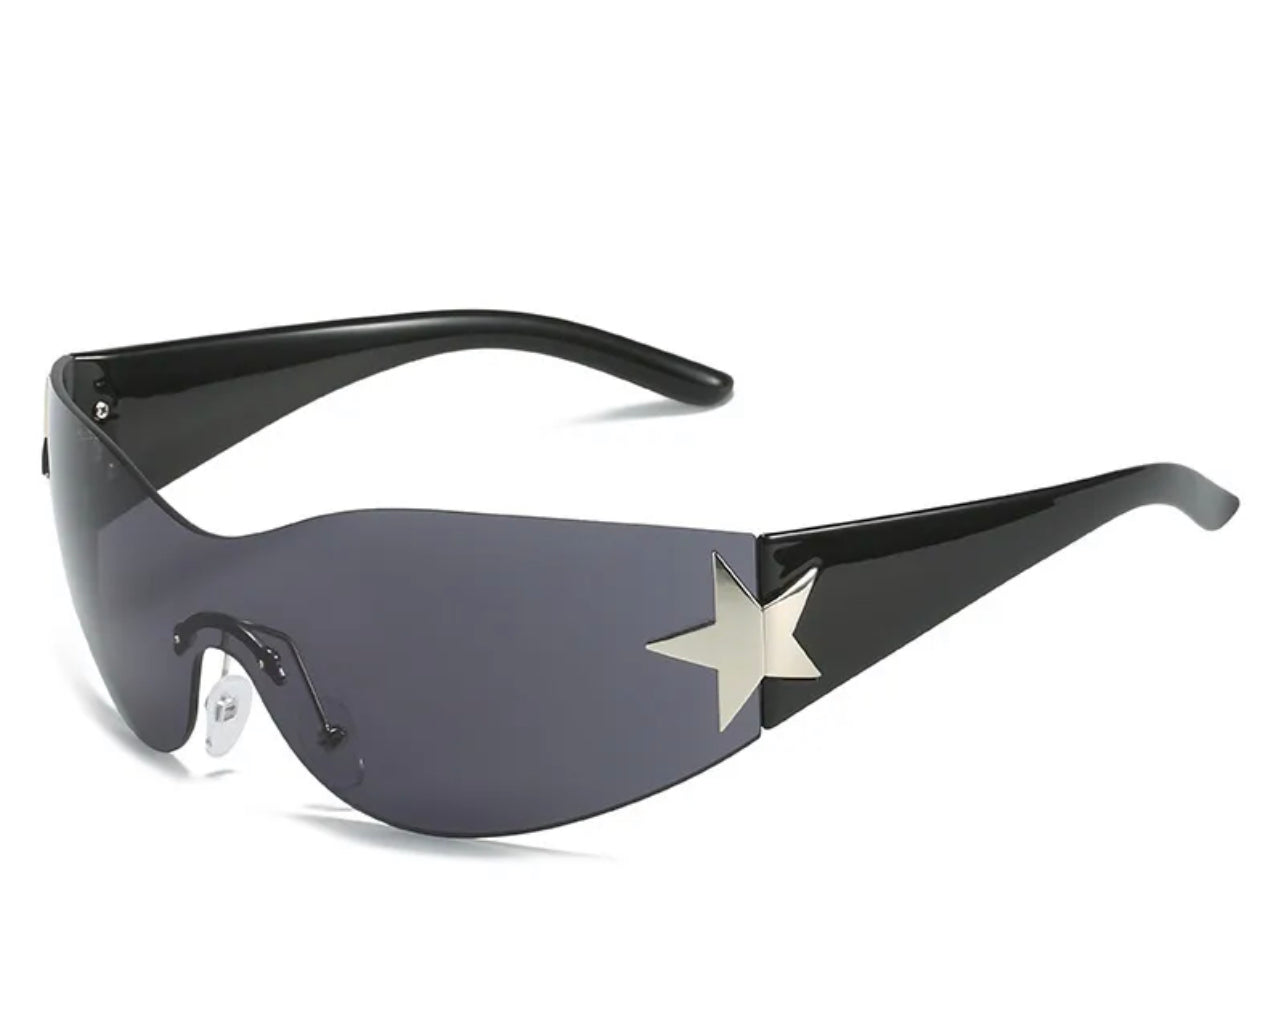 “The Star” Sunglasses